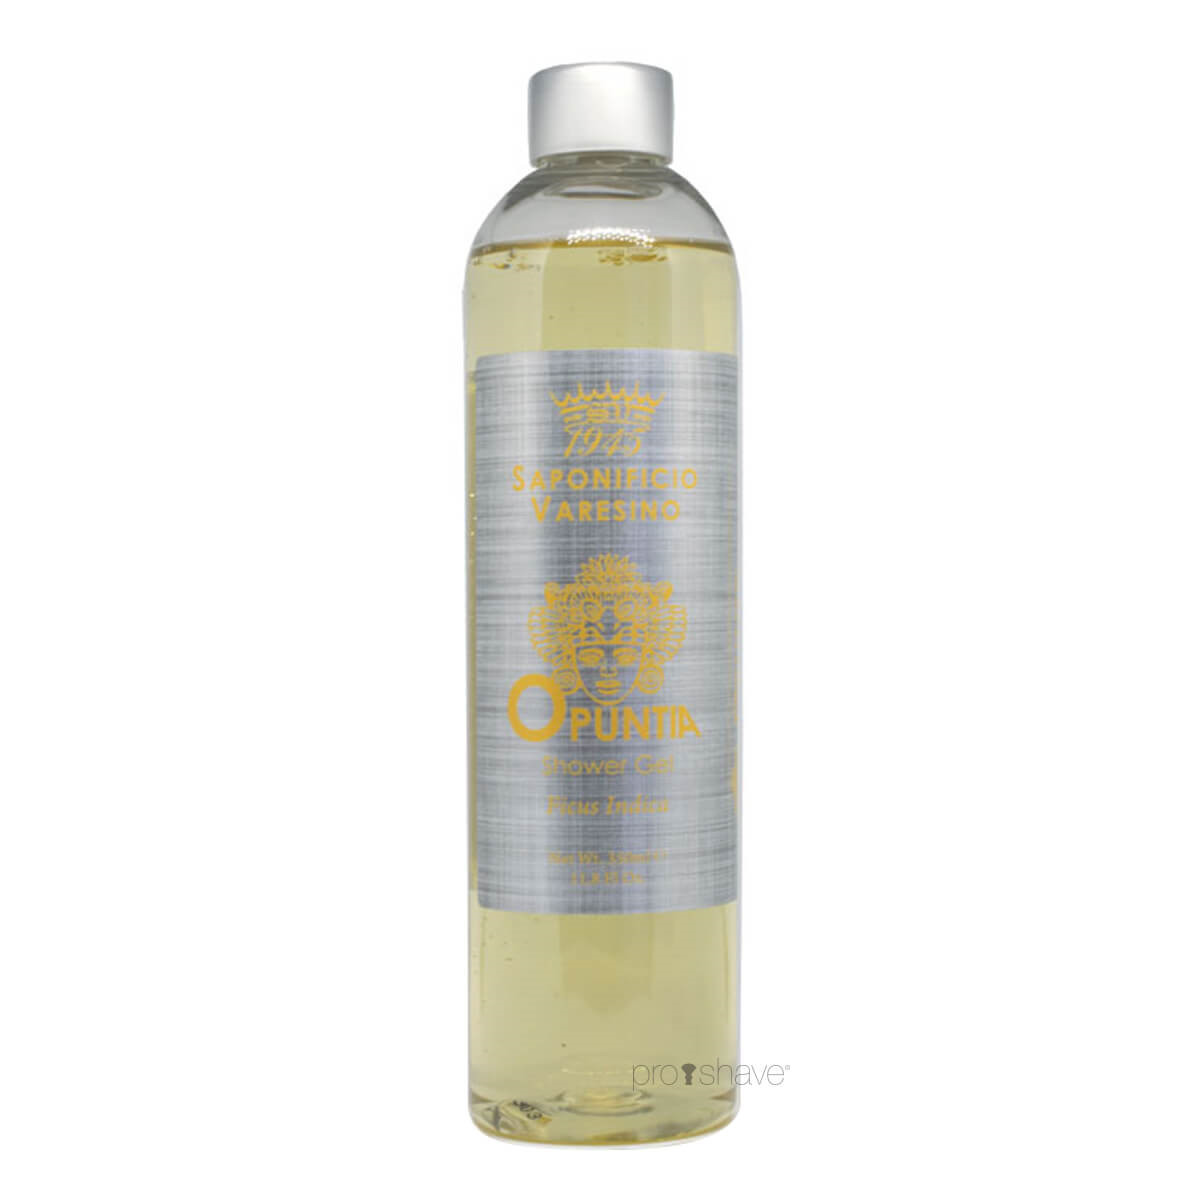 Se Saponificio Varesino Shower Gel, Opuntia, 350 ml. hos Proshave